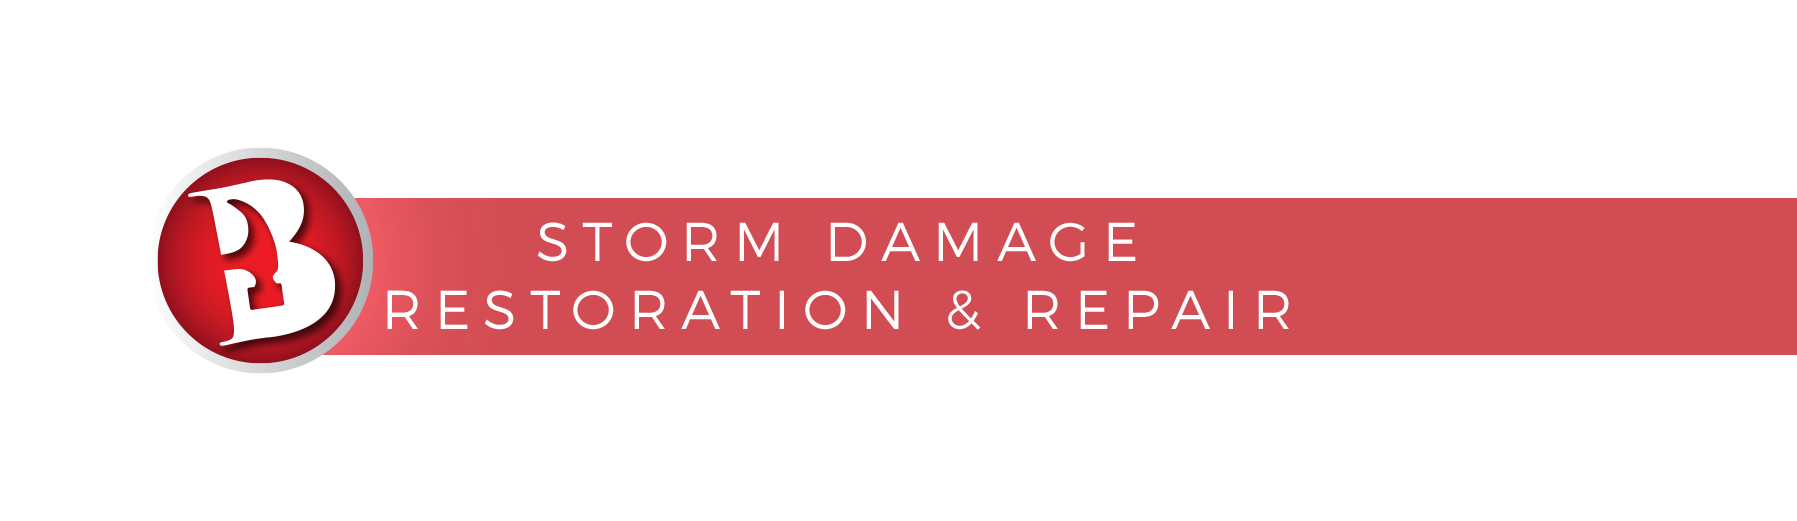 Bachmans Storm Damage Restoration and Repair Transparent Header Logo